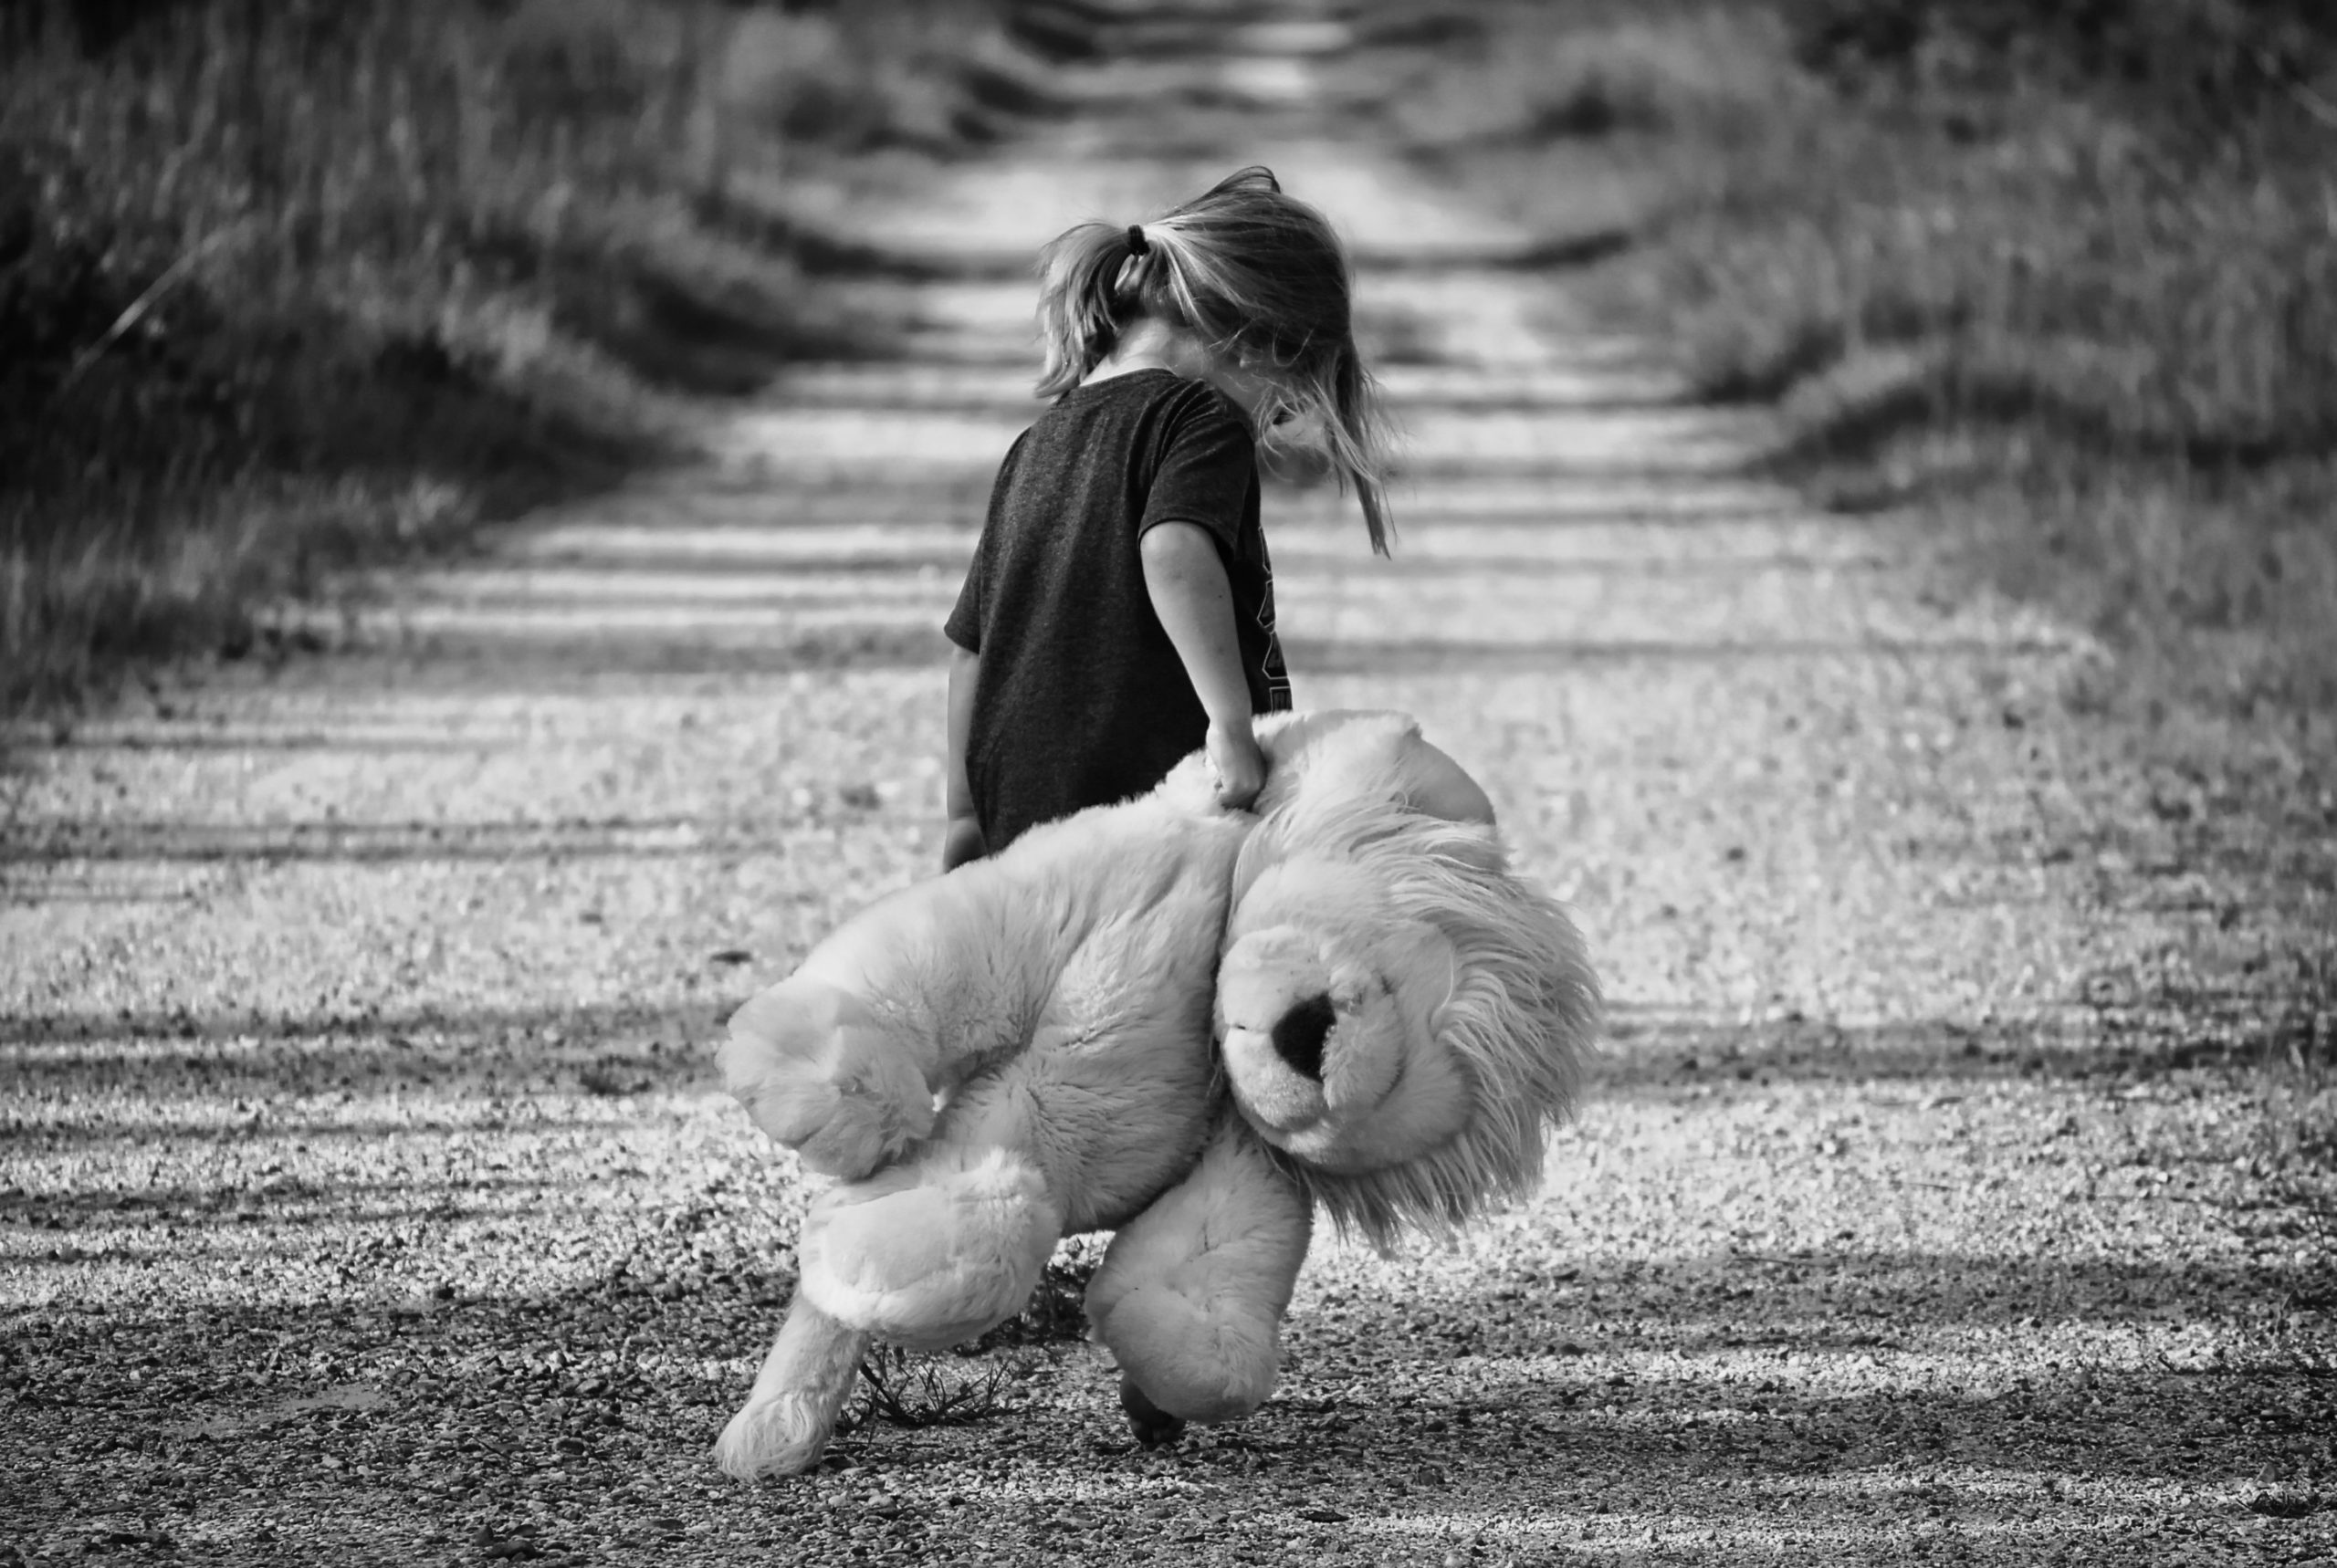 Small girl dragging teddy bear